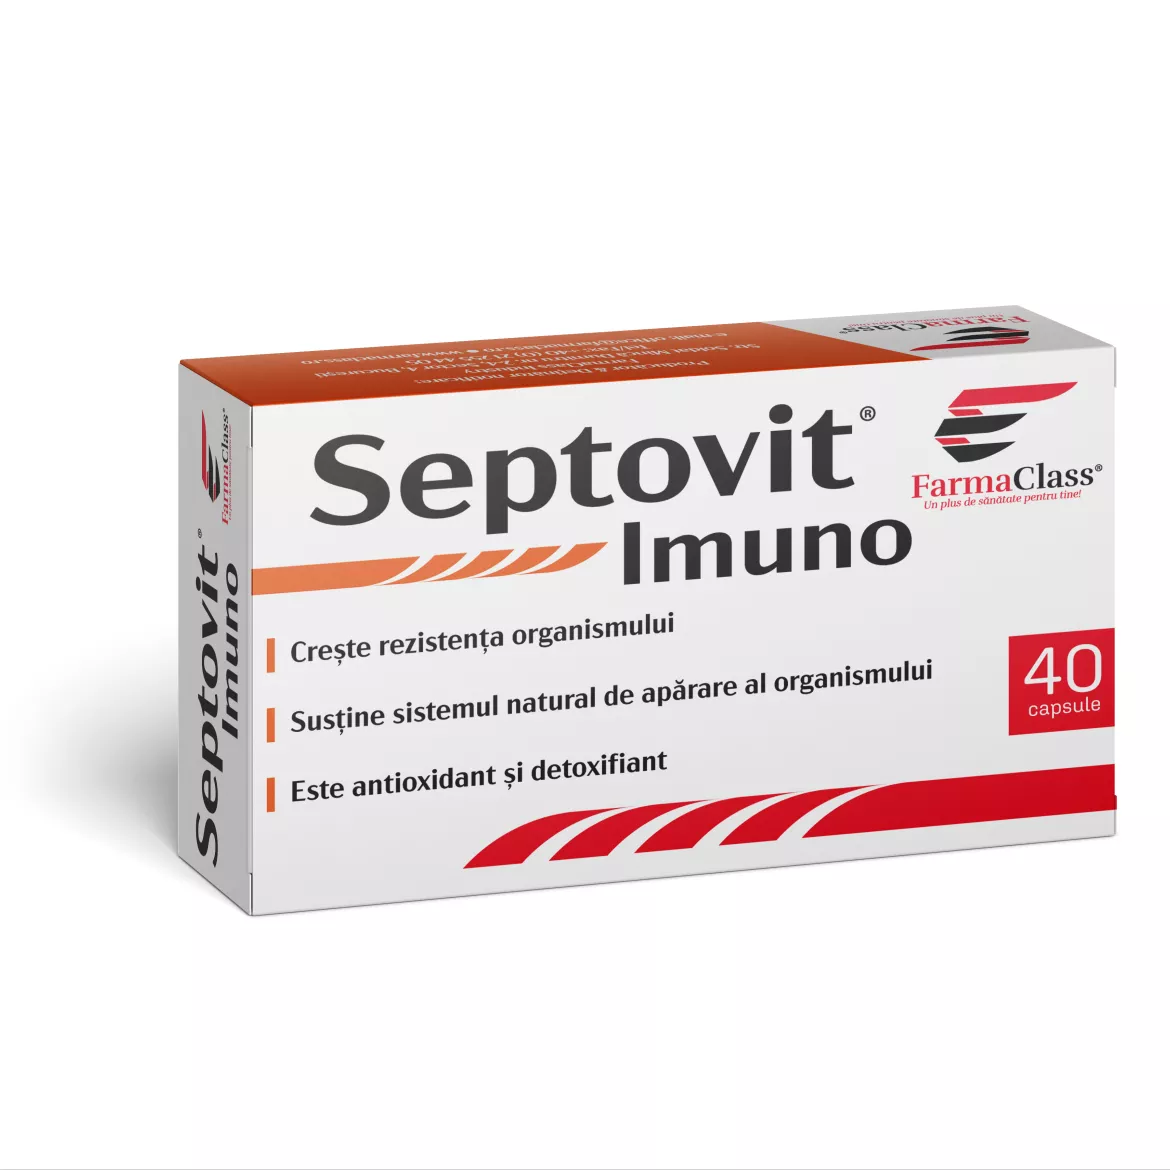 Septovit Imuno, 40 capsule, Farma Class, [],nordpharm.ro